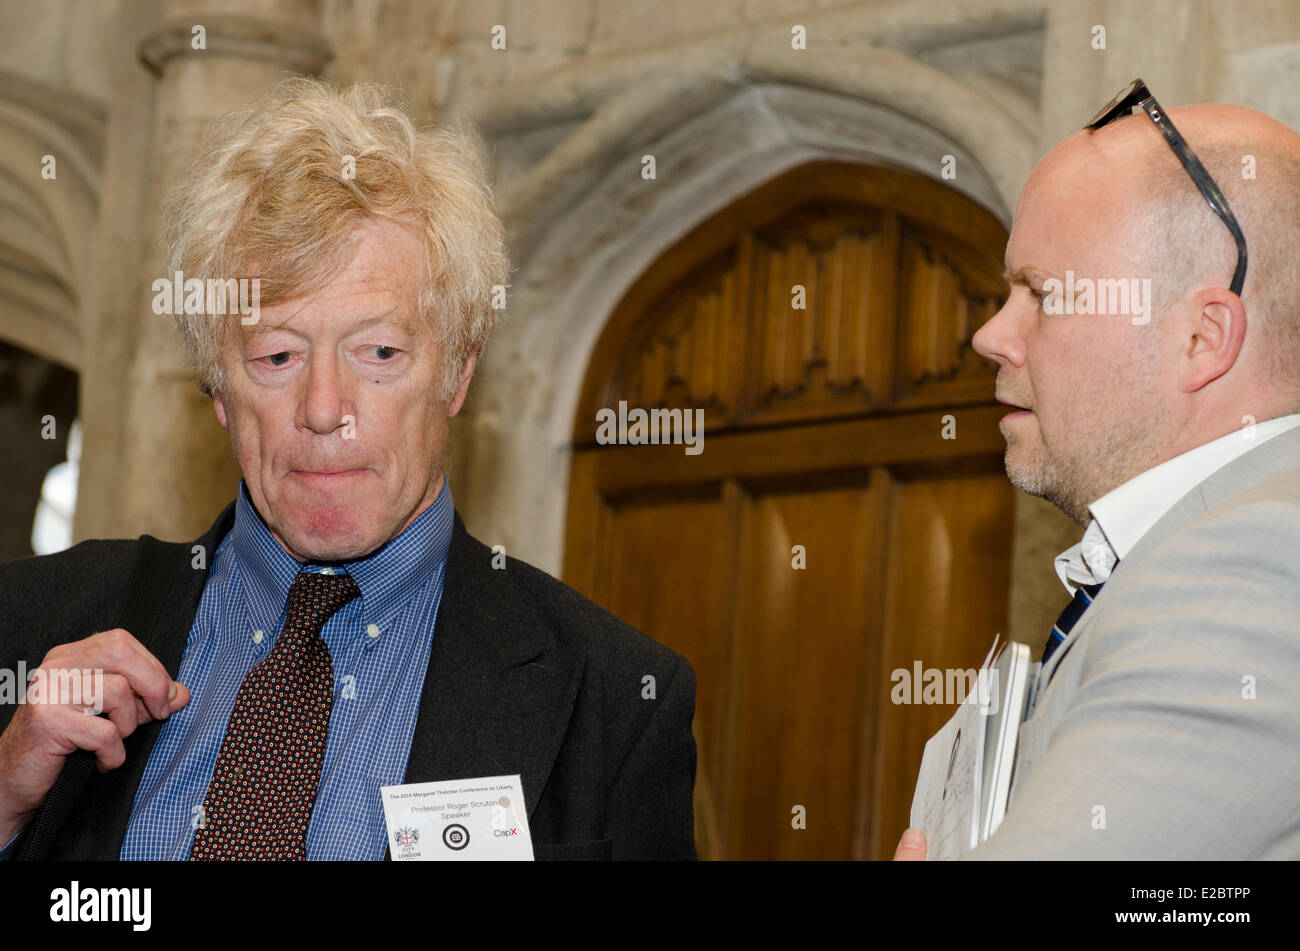 London, UK. 18. Juni 2014. Prof. Roger Scruton und Toby Young auf der Margaret Thatcher Conference on Liberty 18. Juni 2014 London Guildhall uk Credit: Prixnews/Alamy Live News Stockfoto